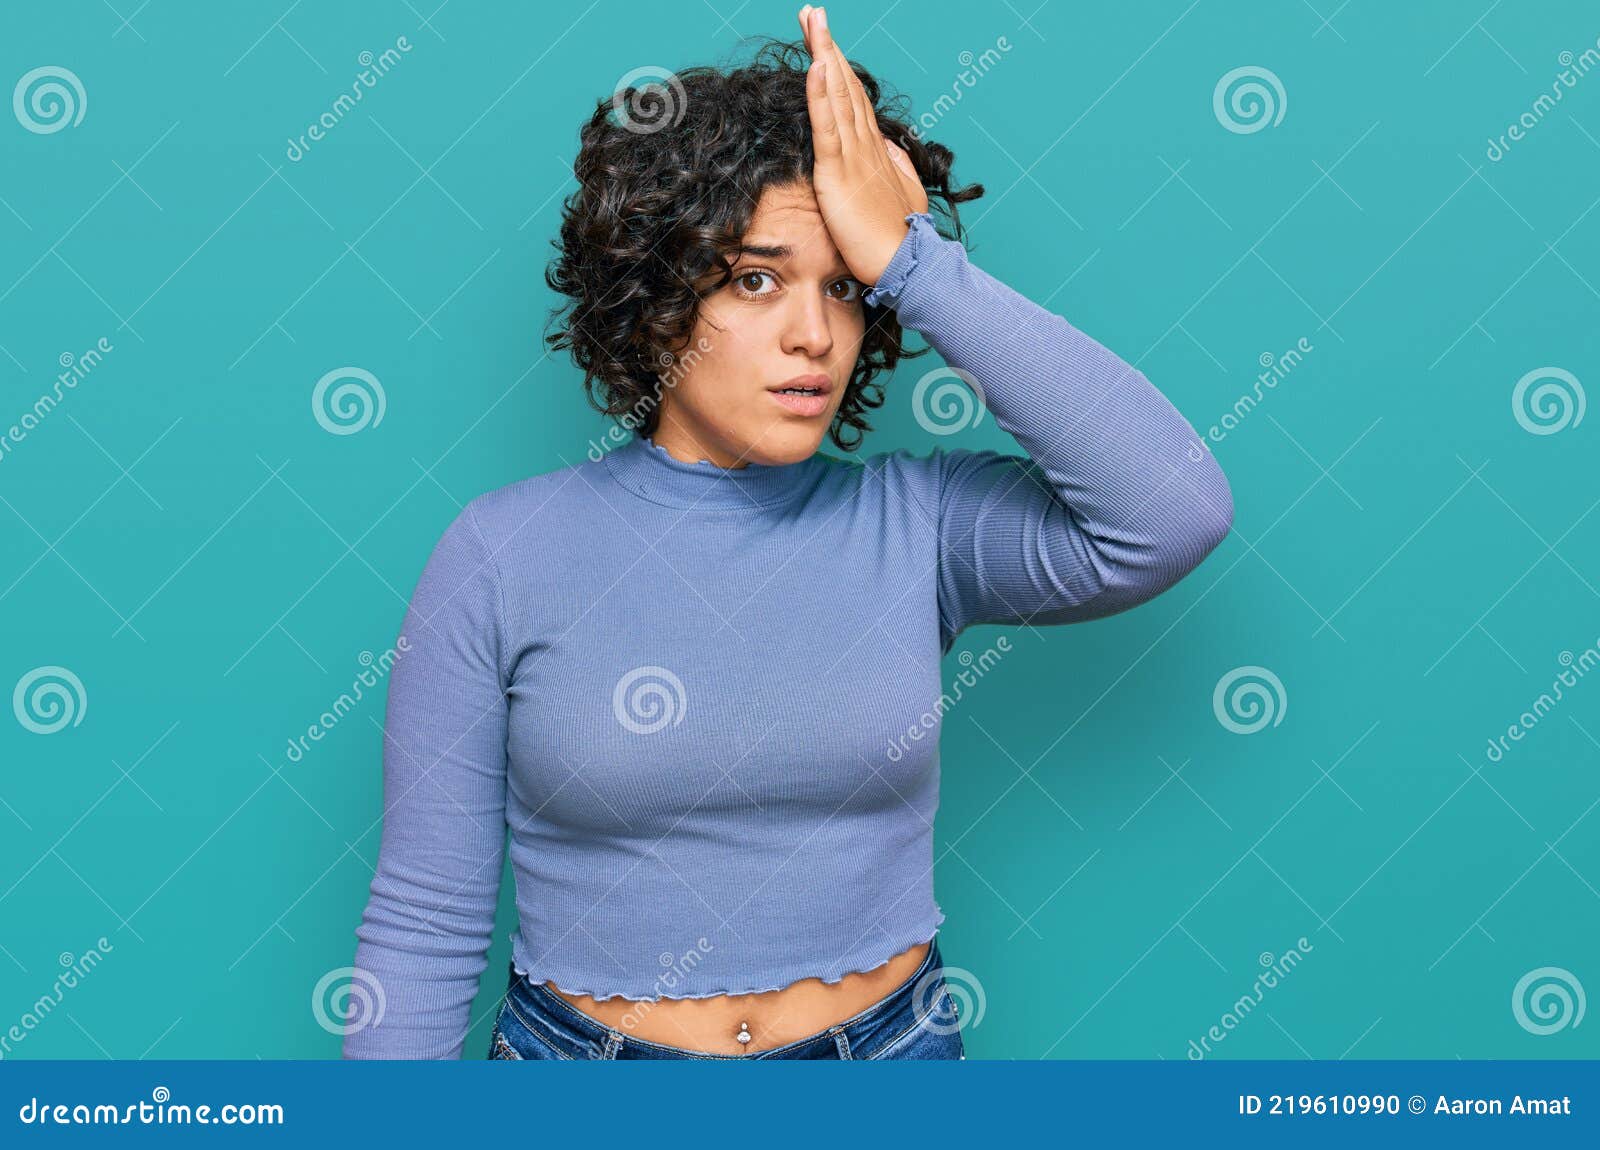 Hispanic Girls with Blue Hair - wide 3